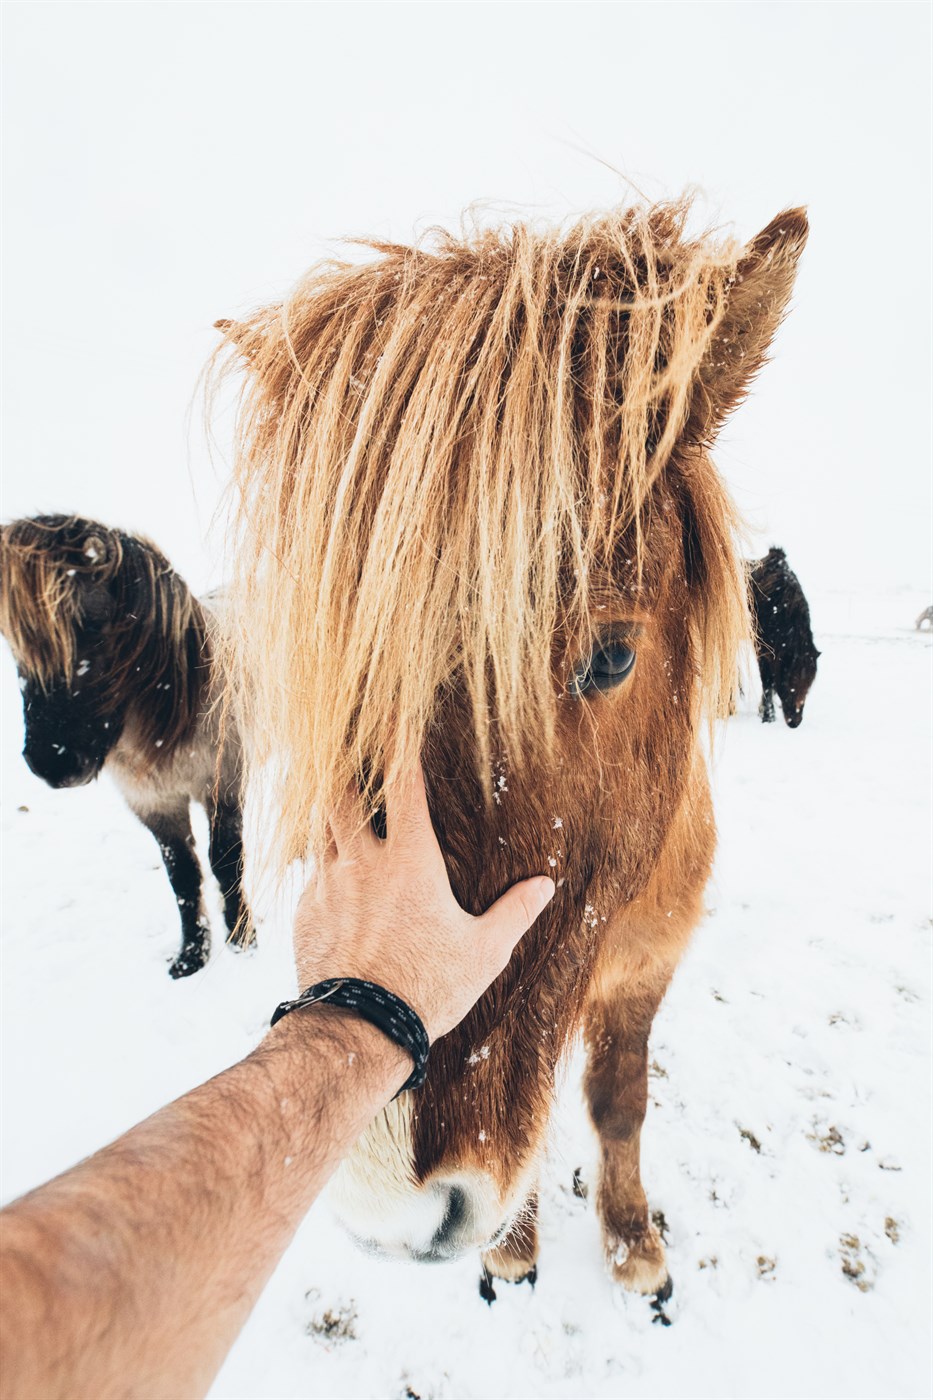 icelandic horses in winter in Iceland